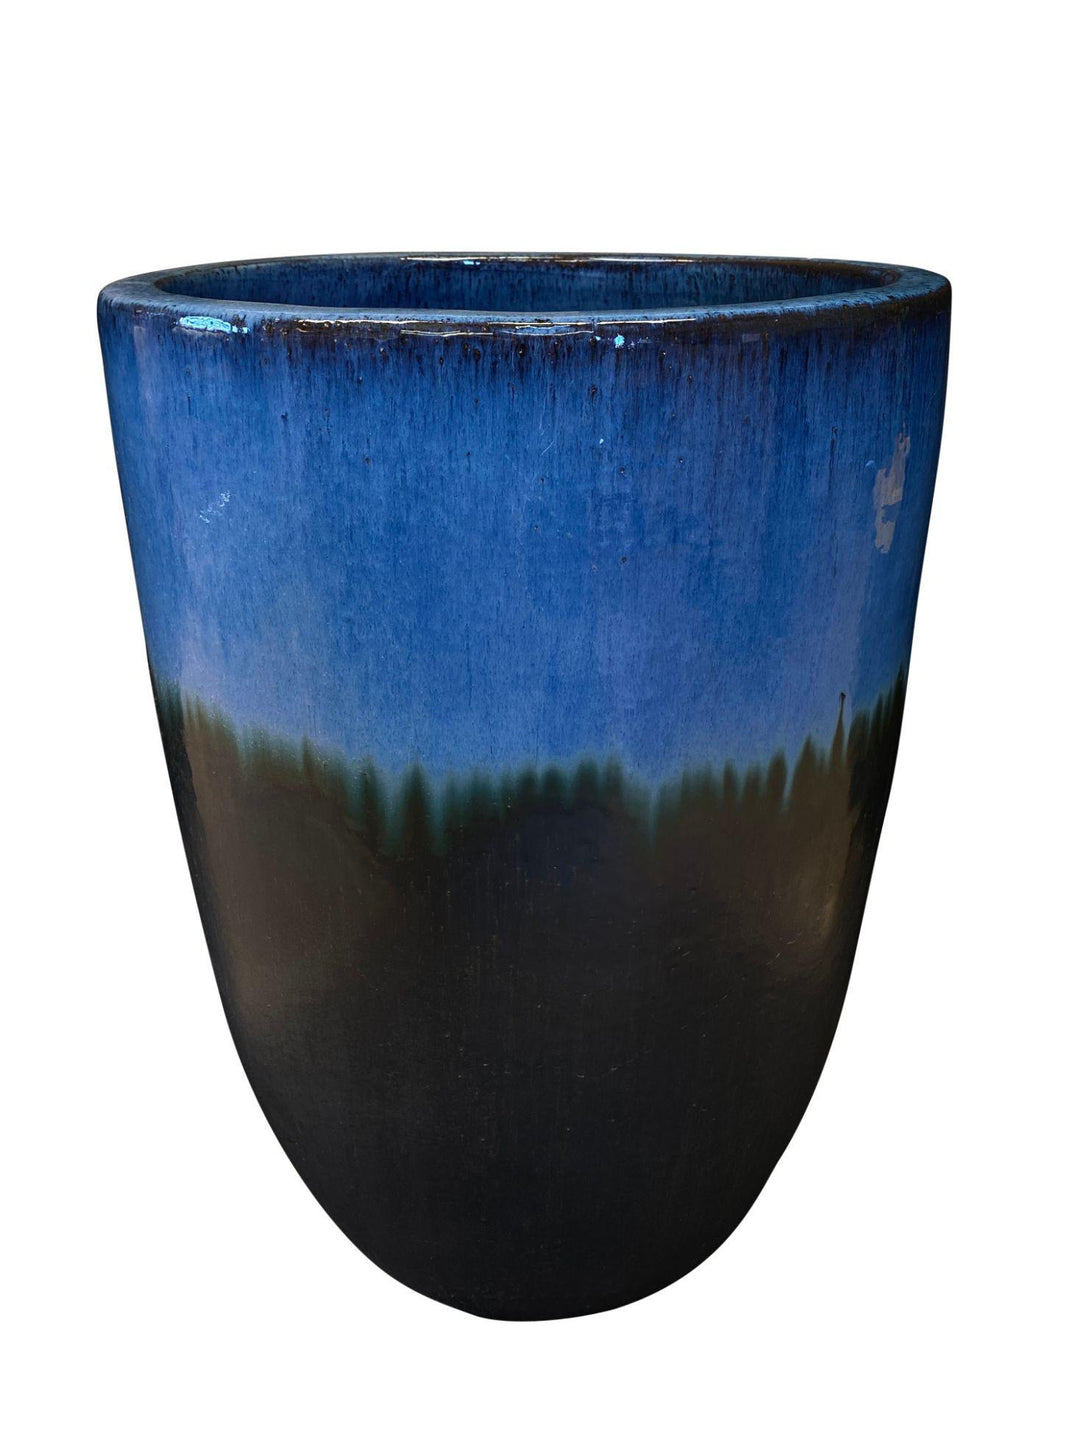 Image of a blue and black modern cylinder planter.